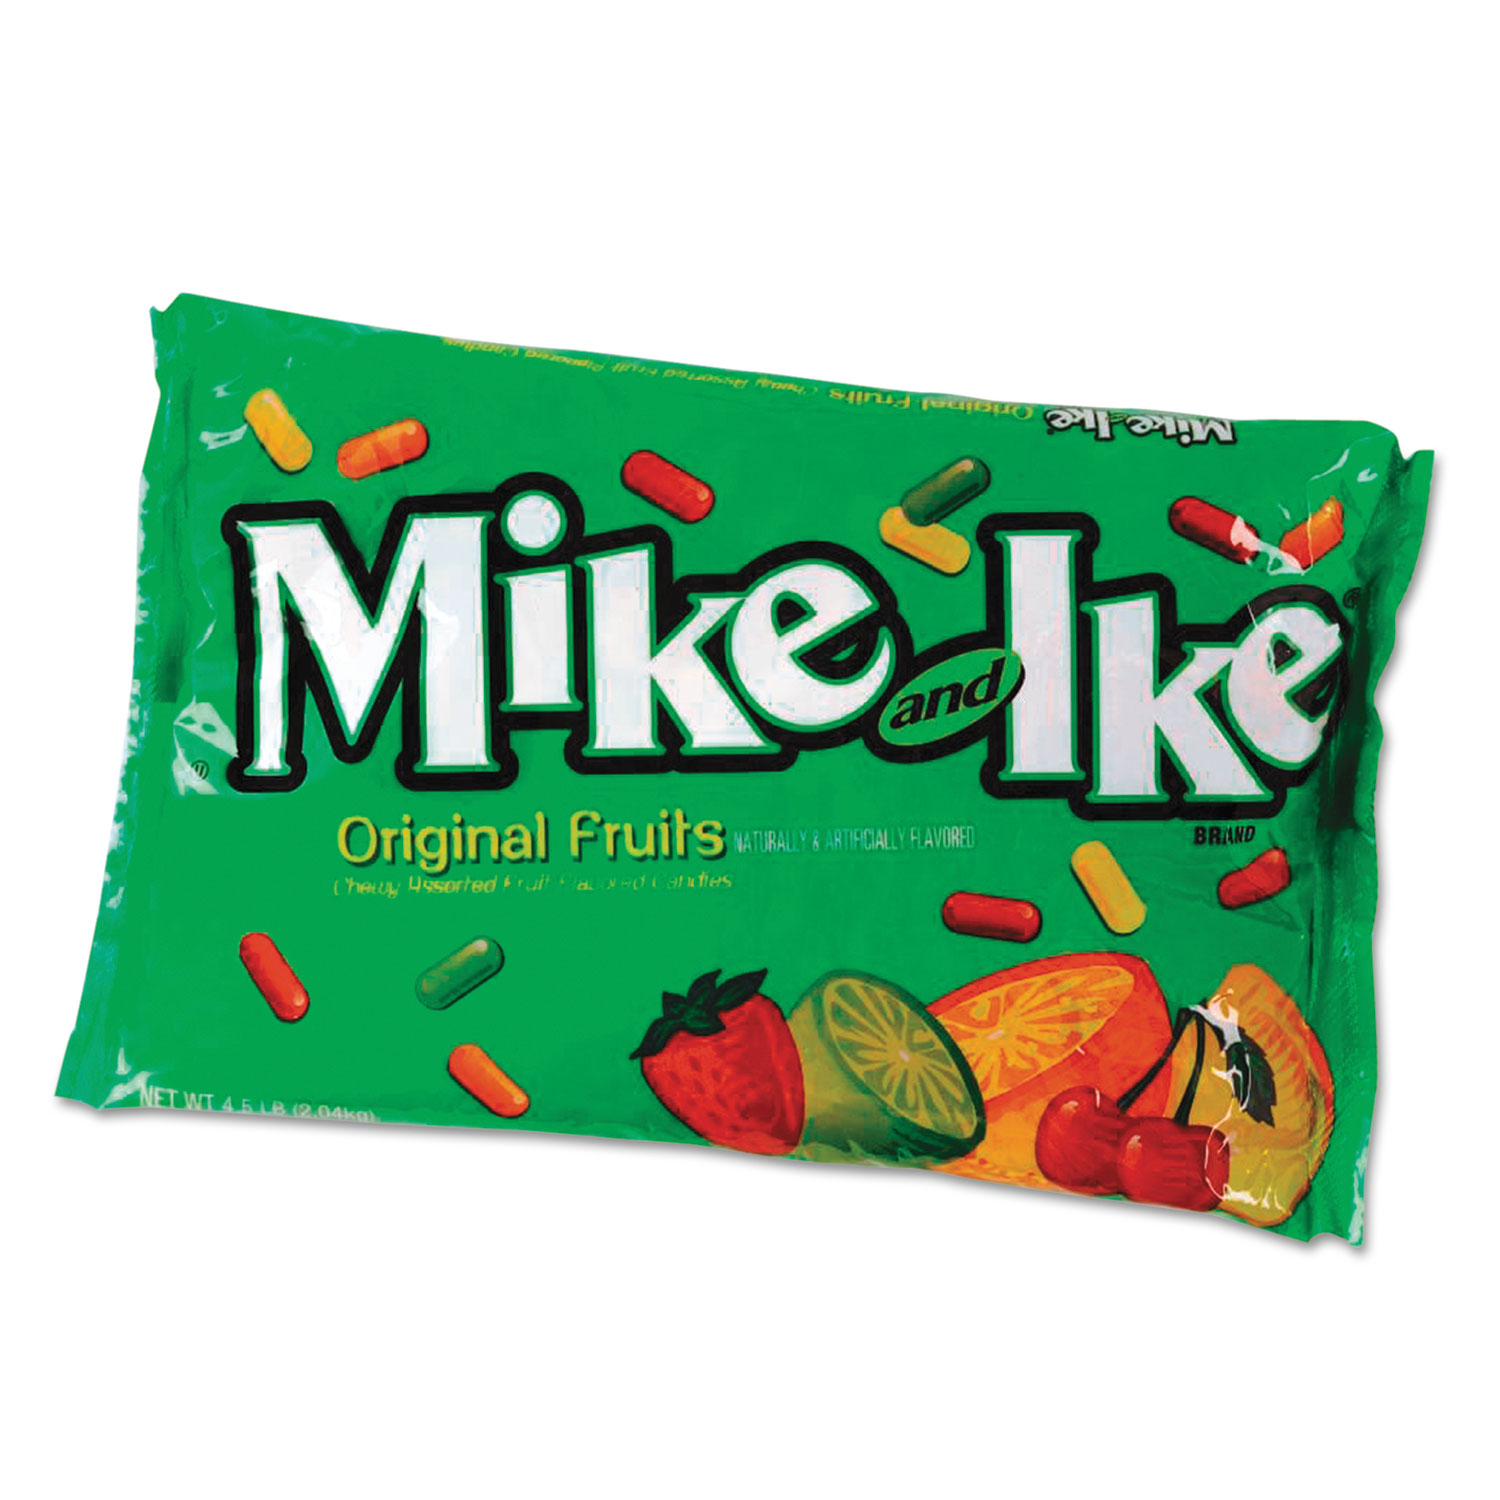  Mike and Ike JUS46097 Candy, Original Fruits, 4.5lb Bag (JBI46097) 